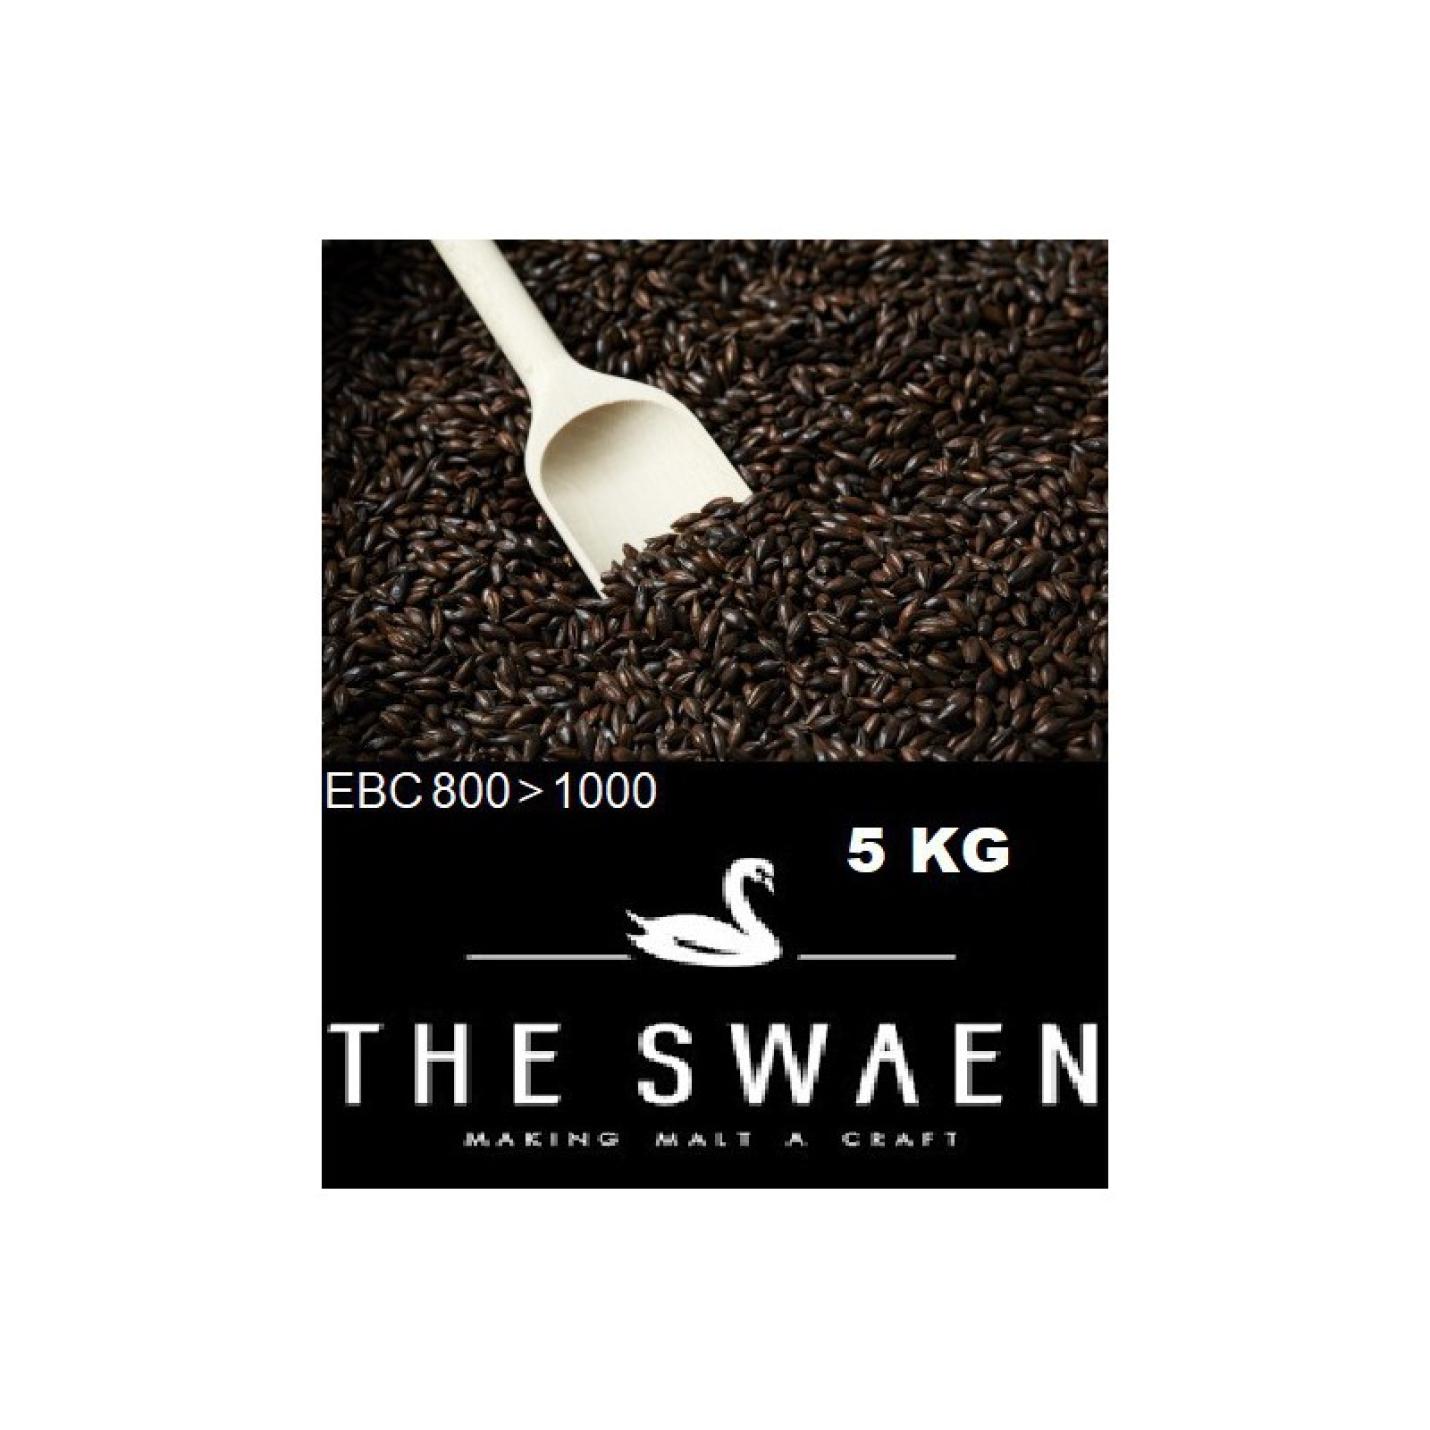 Chocolade tarwemout BlackSwaen Chocolate W 5 Kg 800-1000 EBC